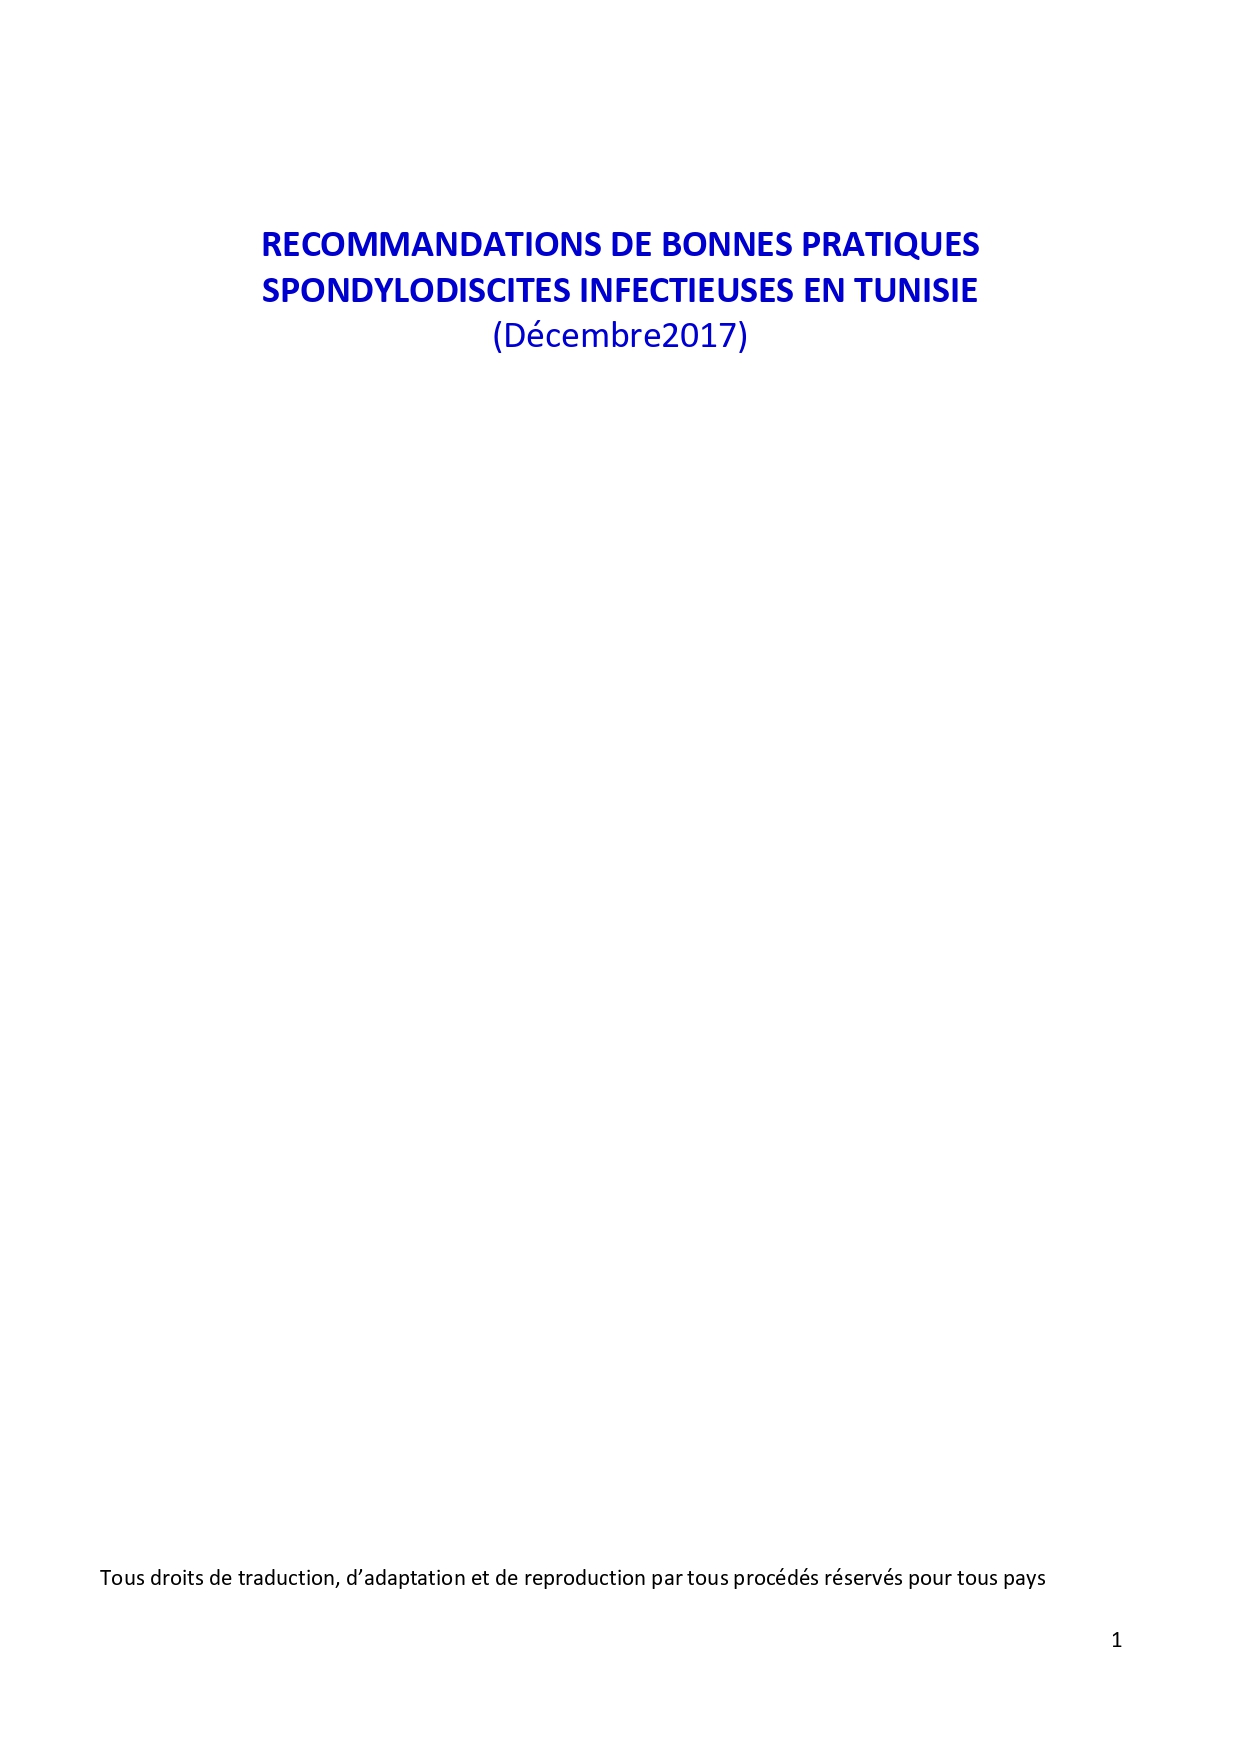 Spondylodiscites infectieuses en Tunisie (2017)